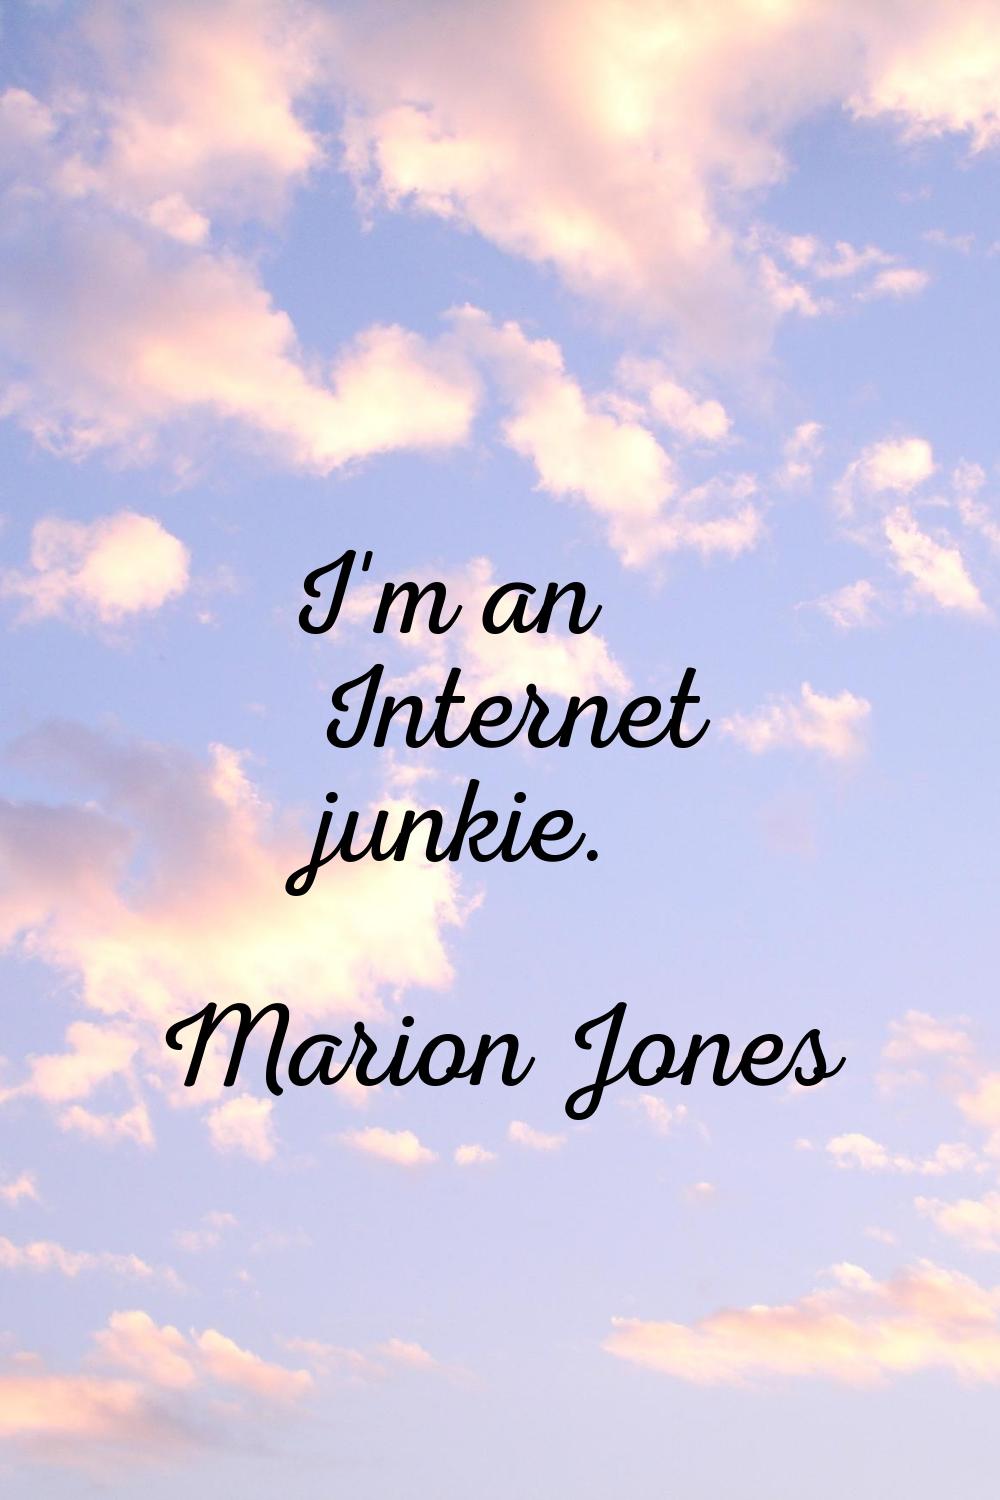 I'm an Internet junkie.